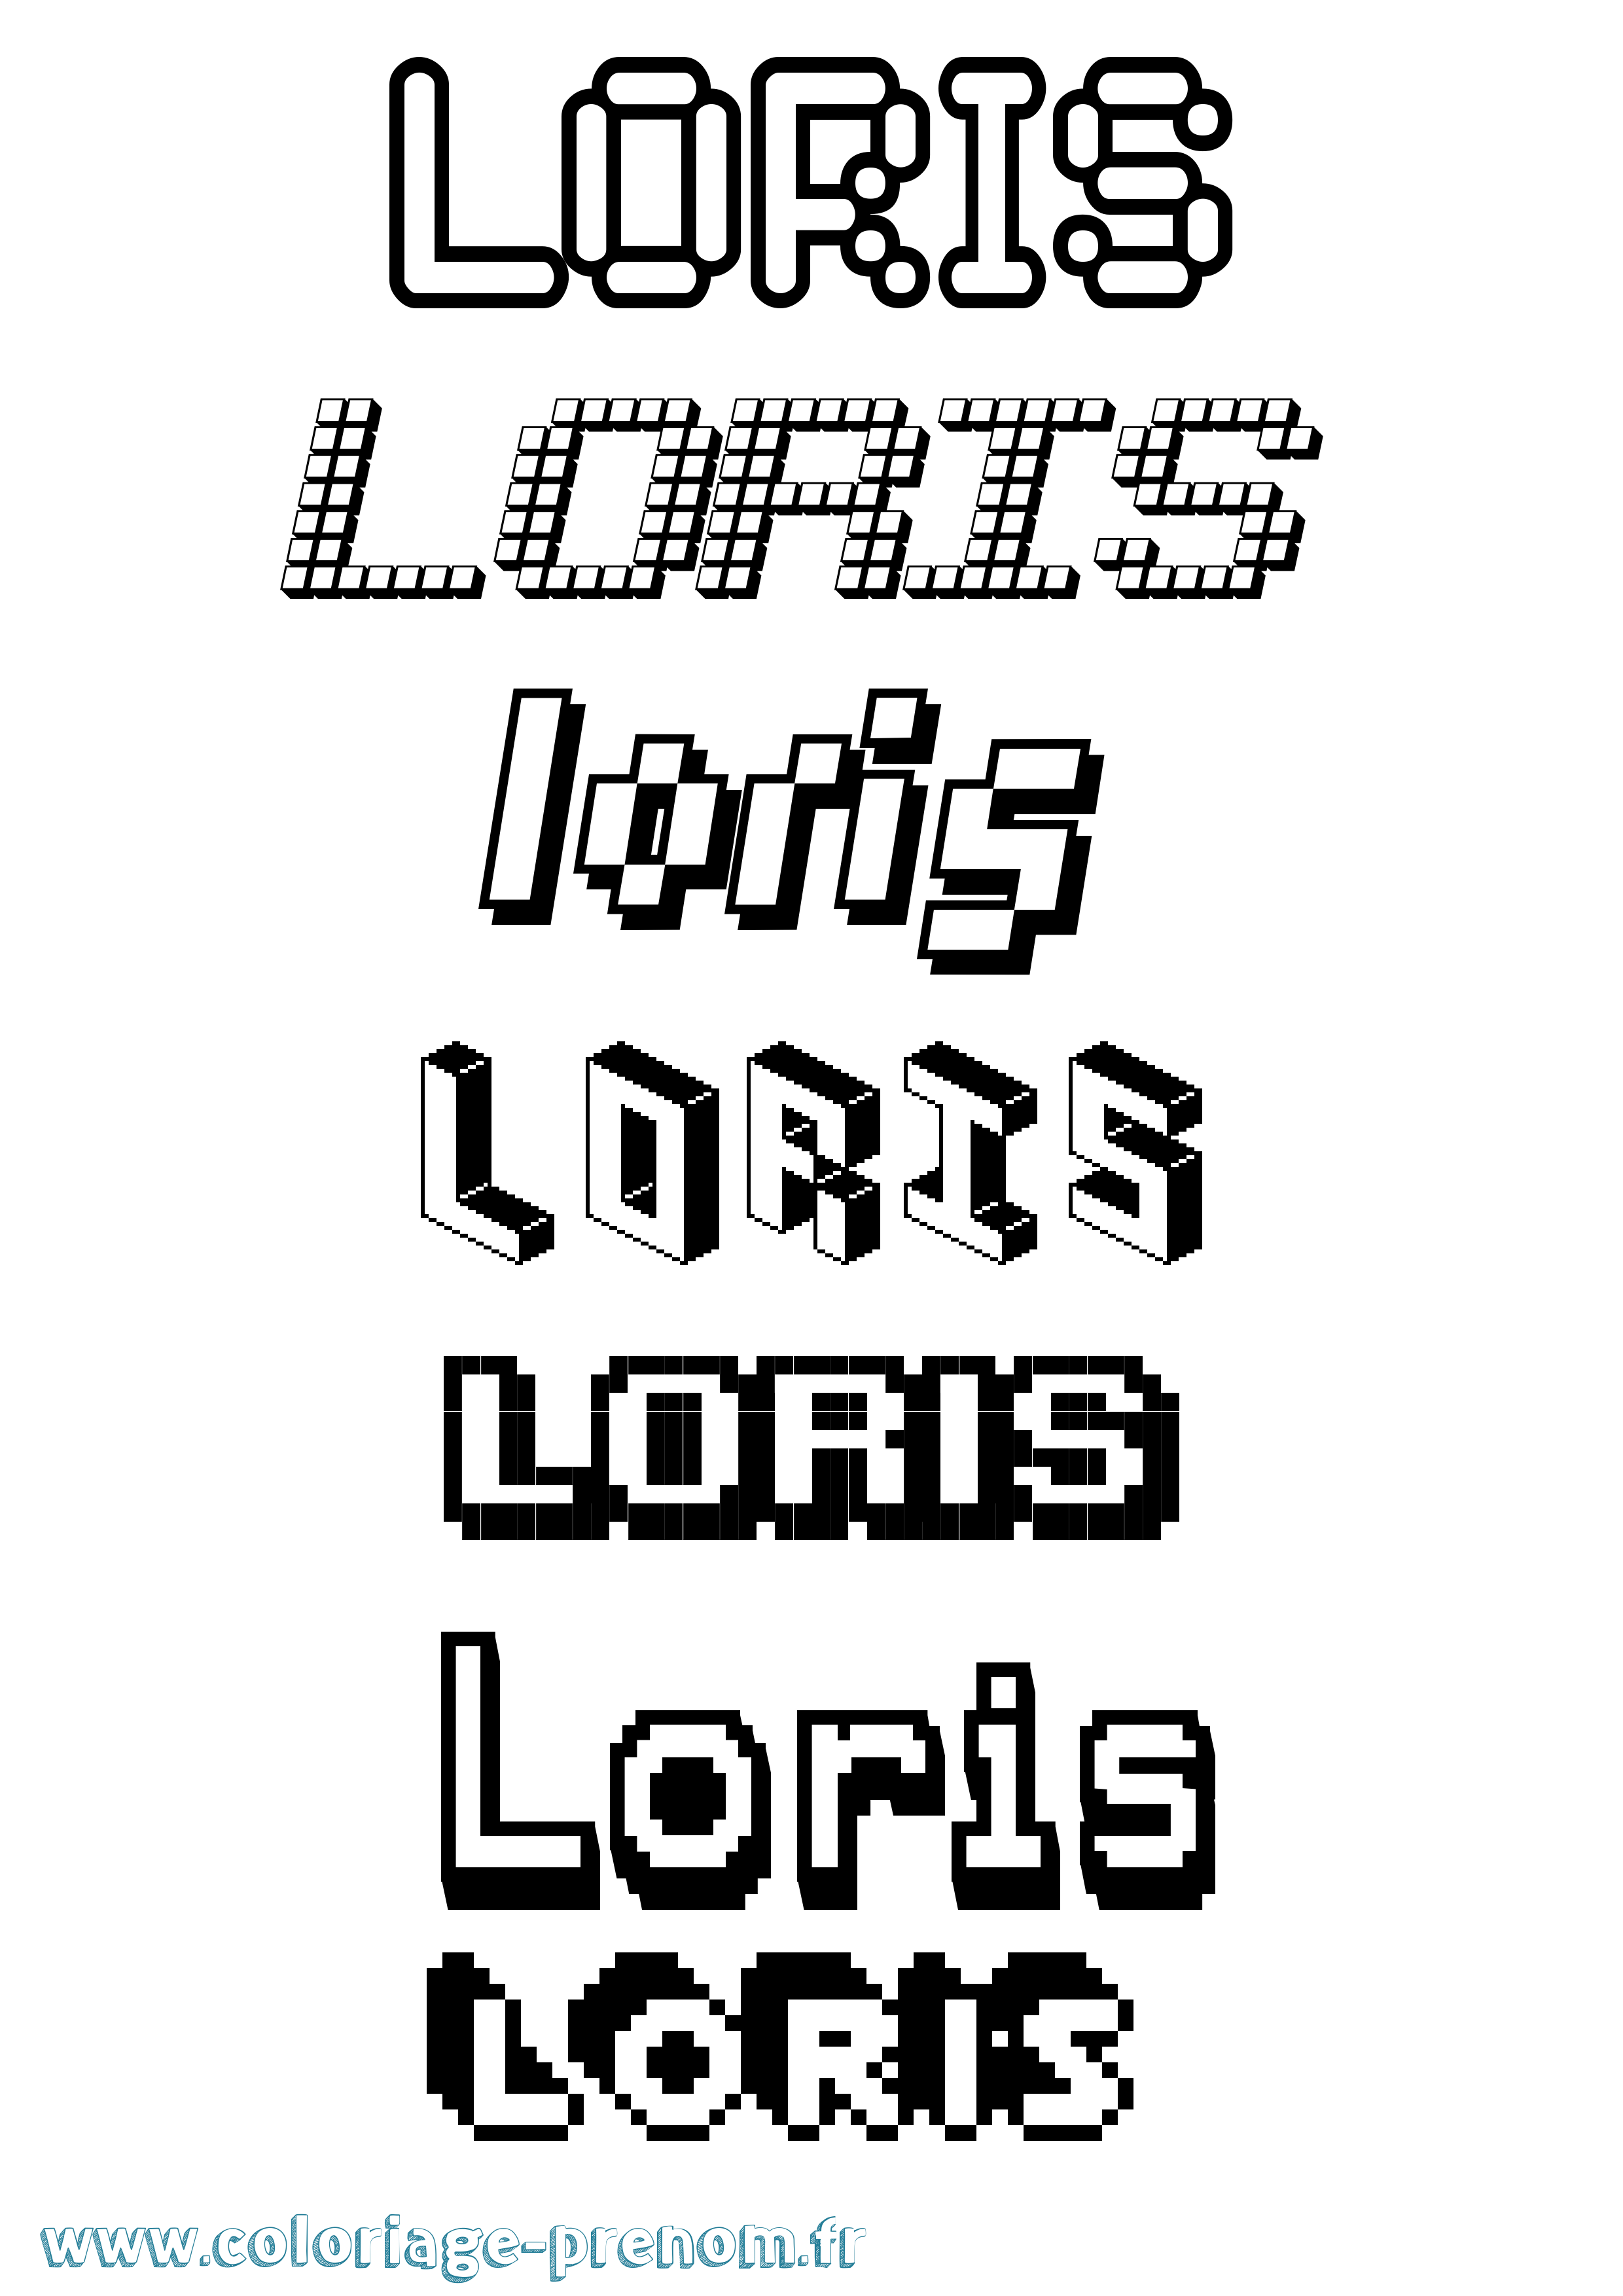 Coloriage prénom Loris Pixel